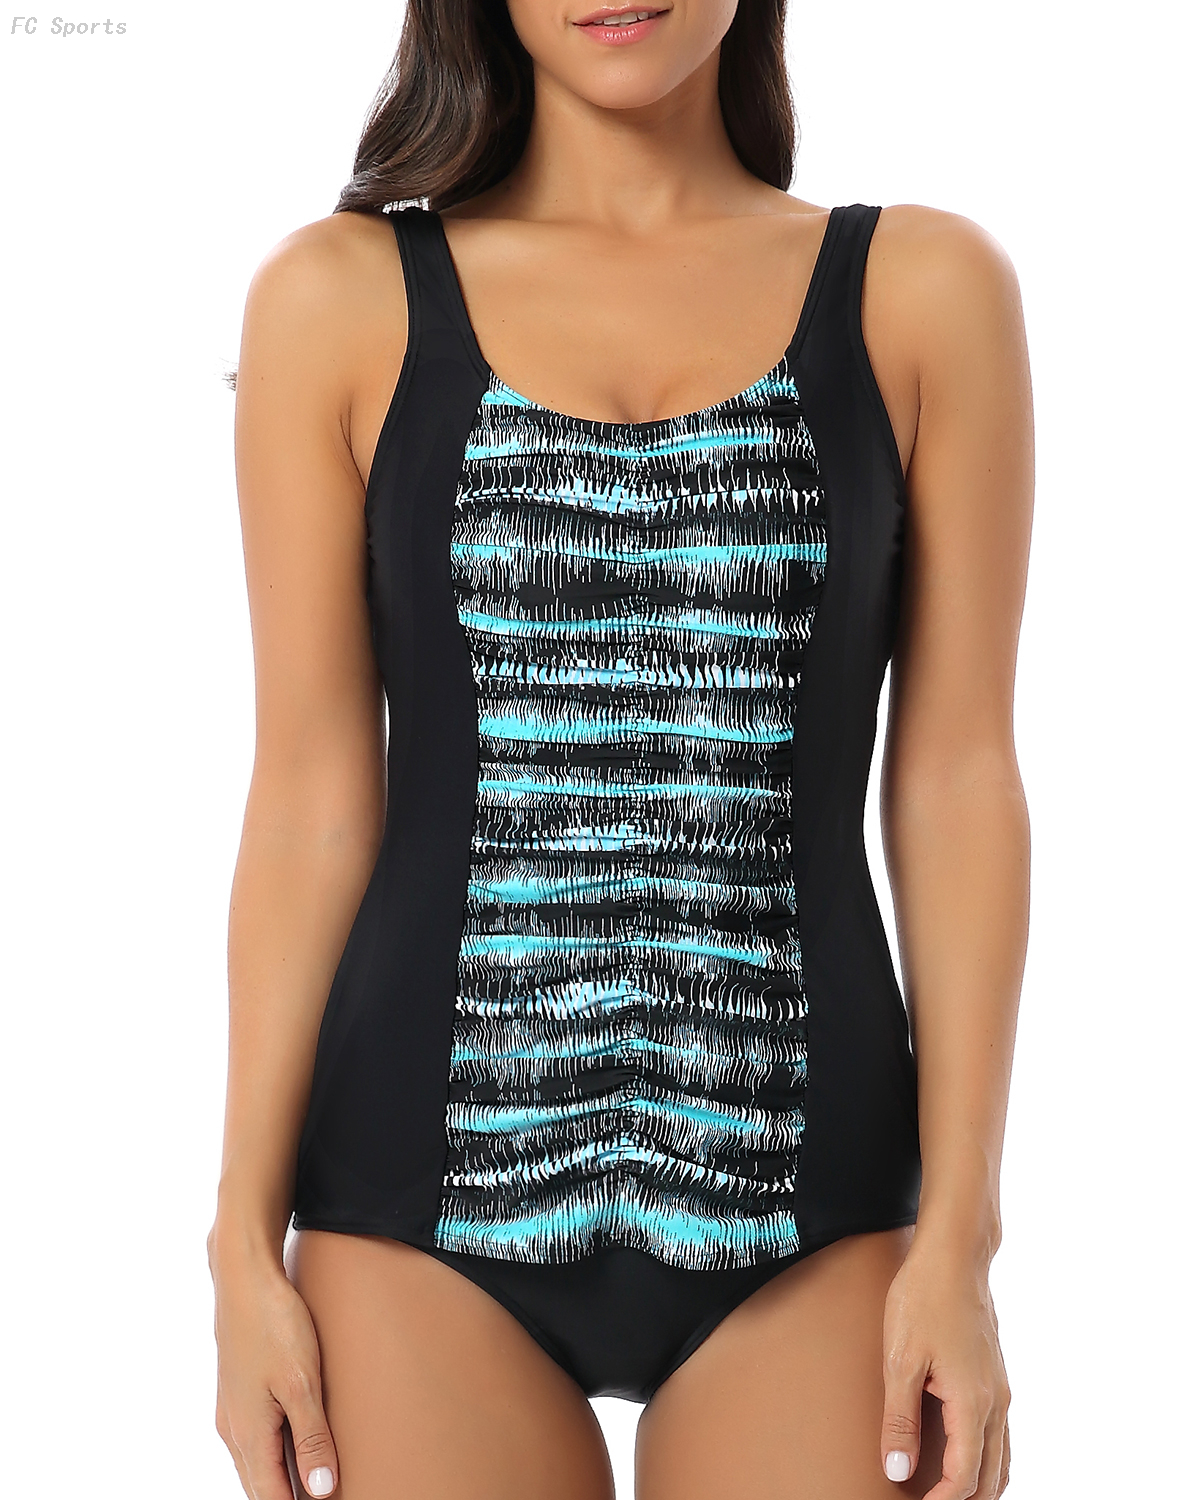 FC Sports Monokini Women's Swimwear Training Suit , Small Order, Wholesale